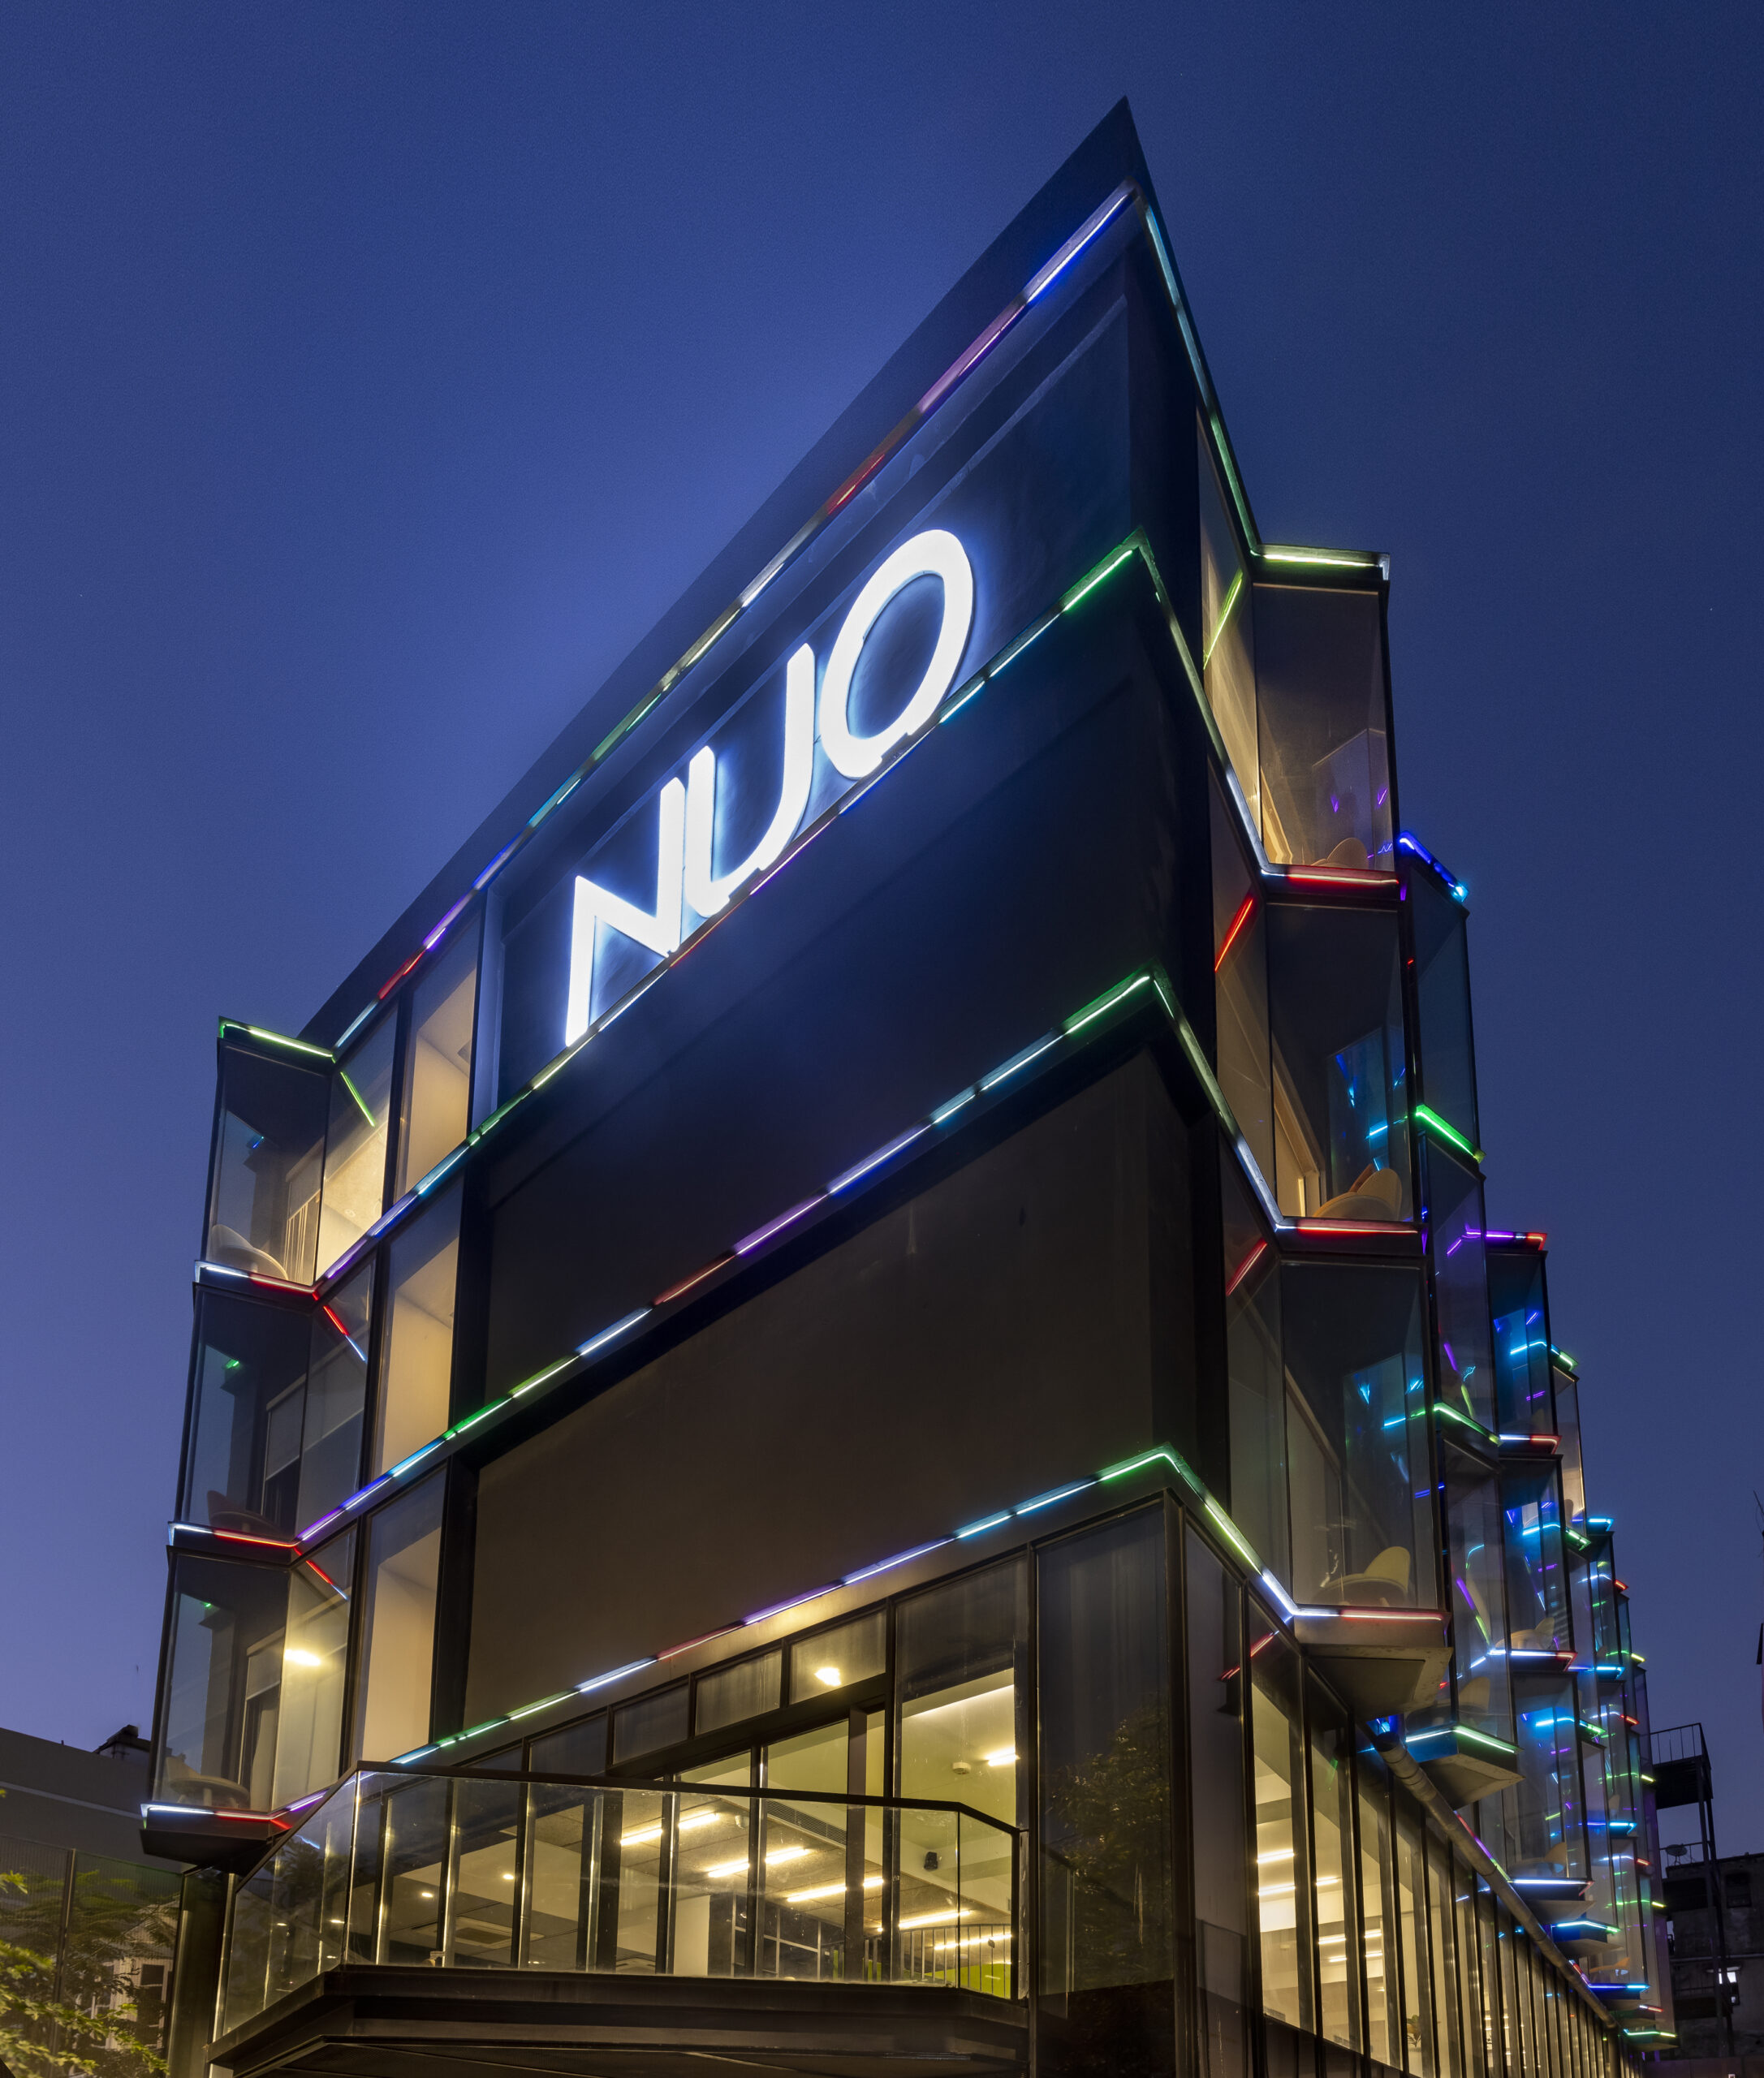 “Nuo: A Luminous Beacon of Urban Luxury”